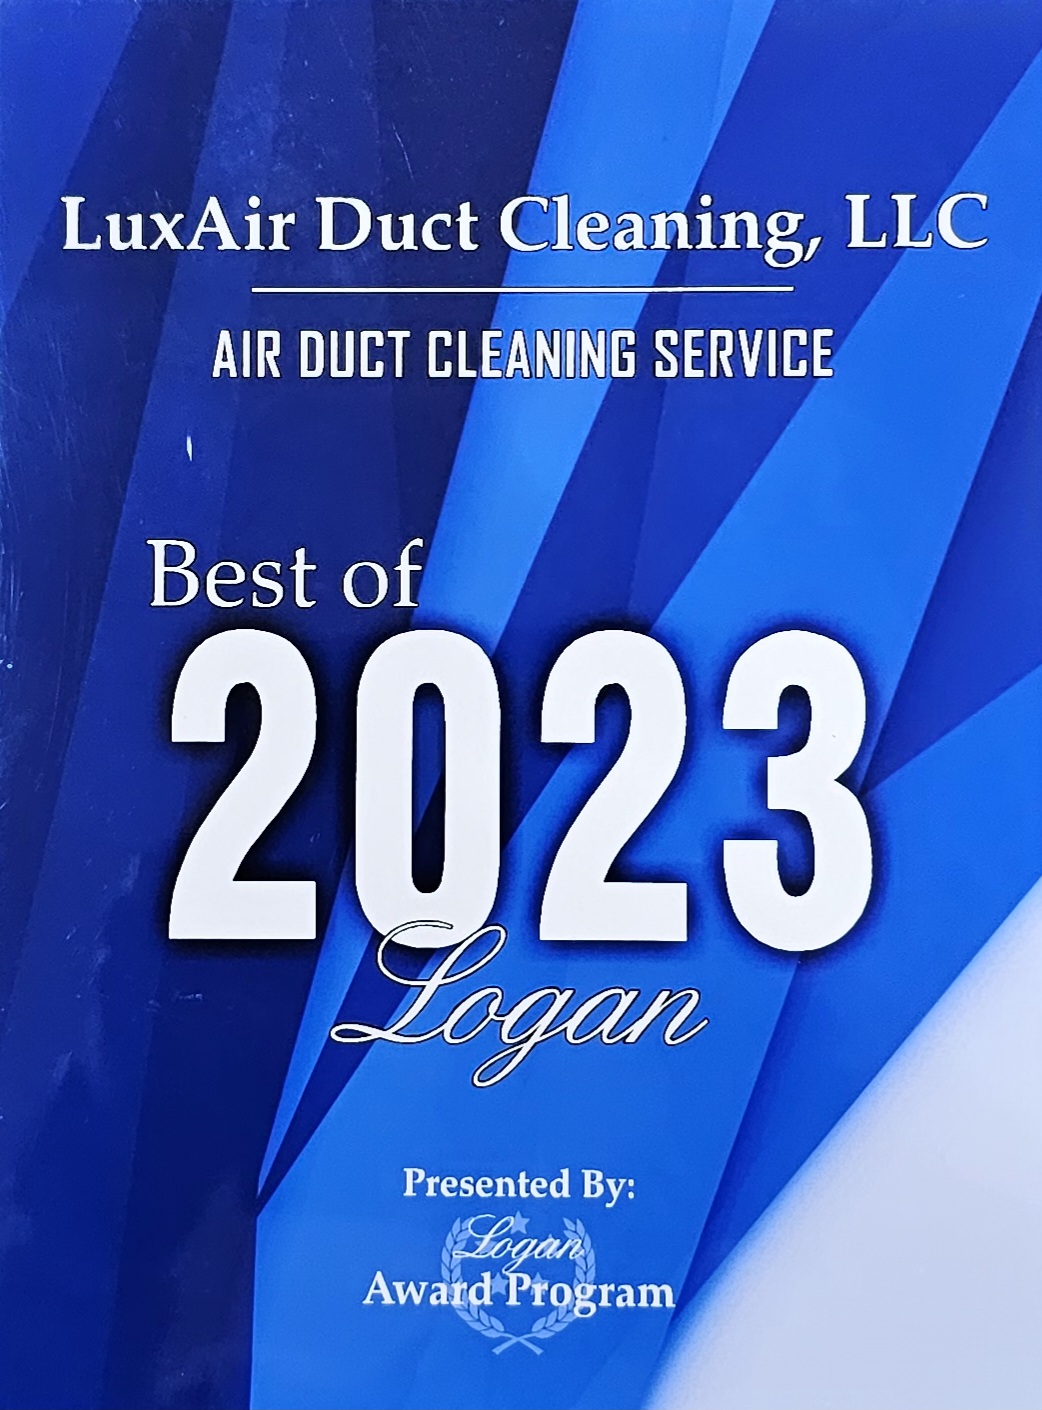 Logan best - Award, Air duct cleaning